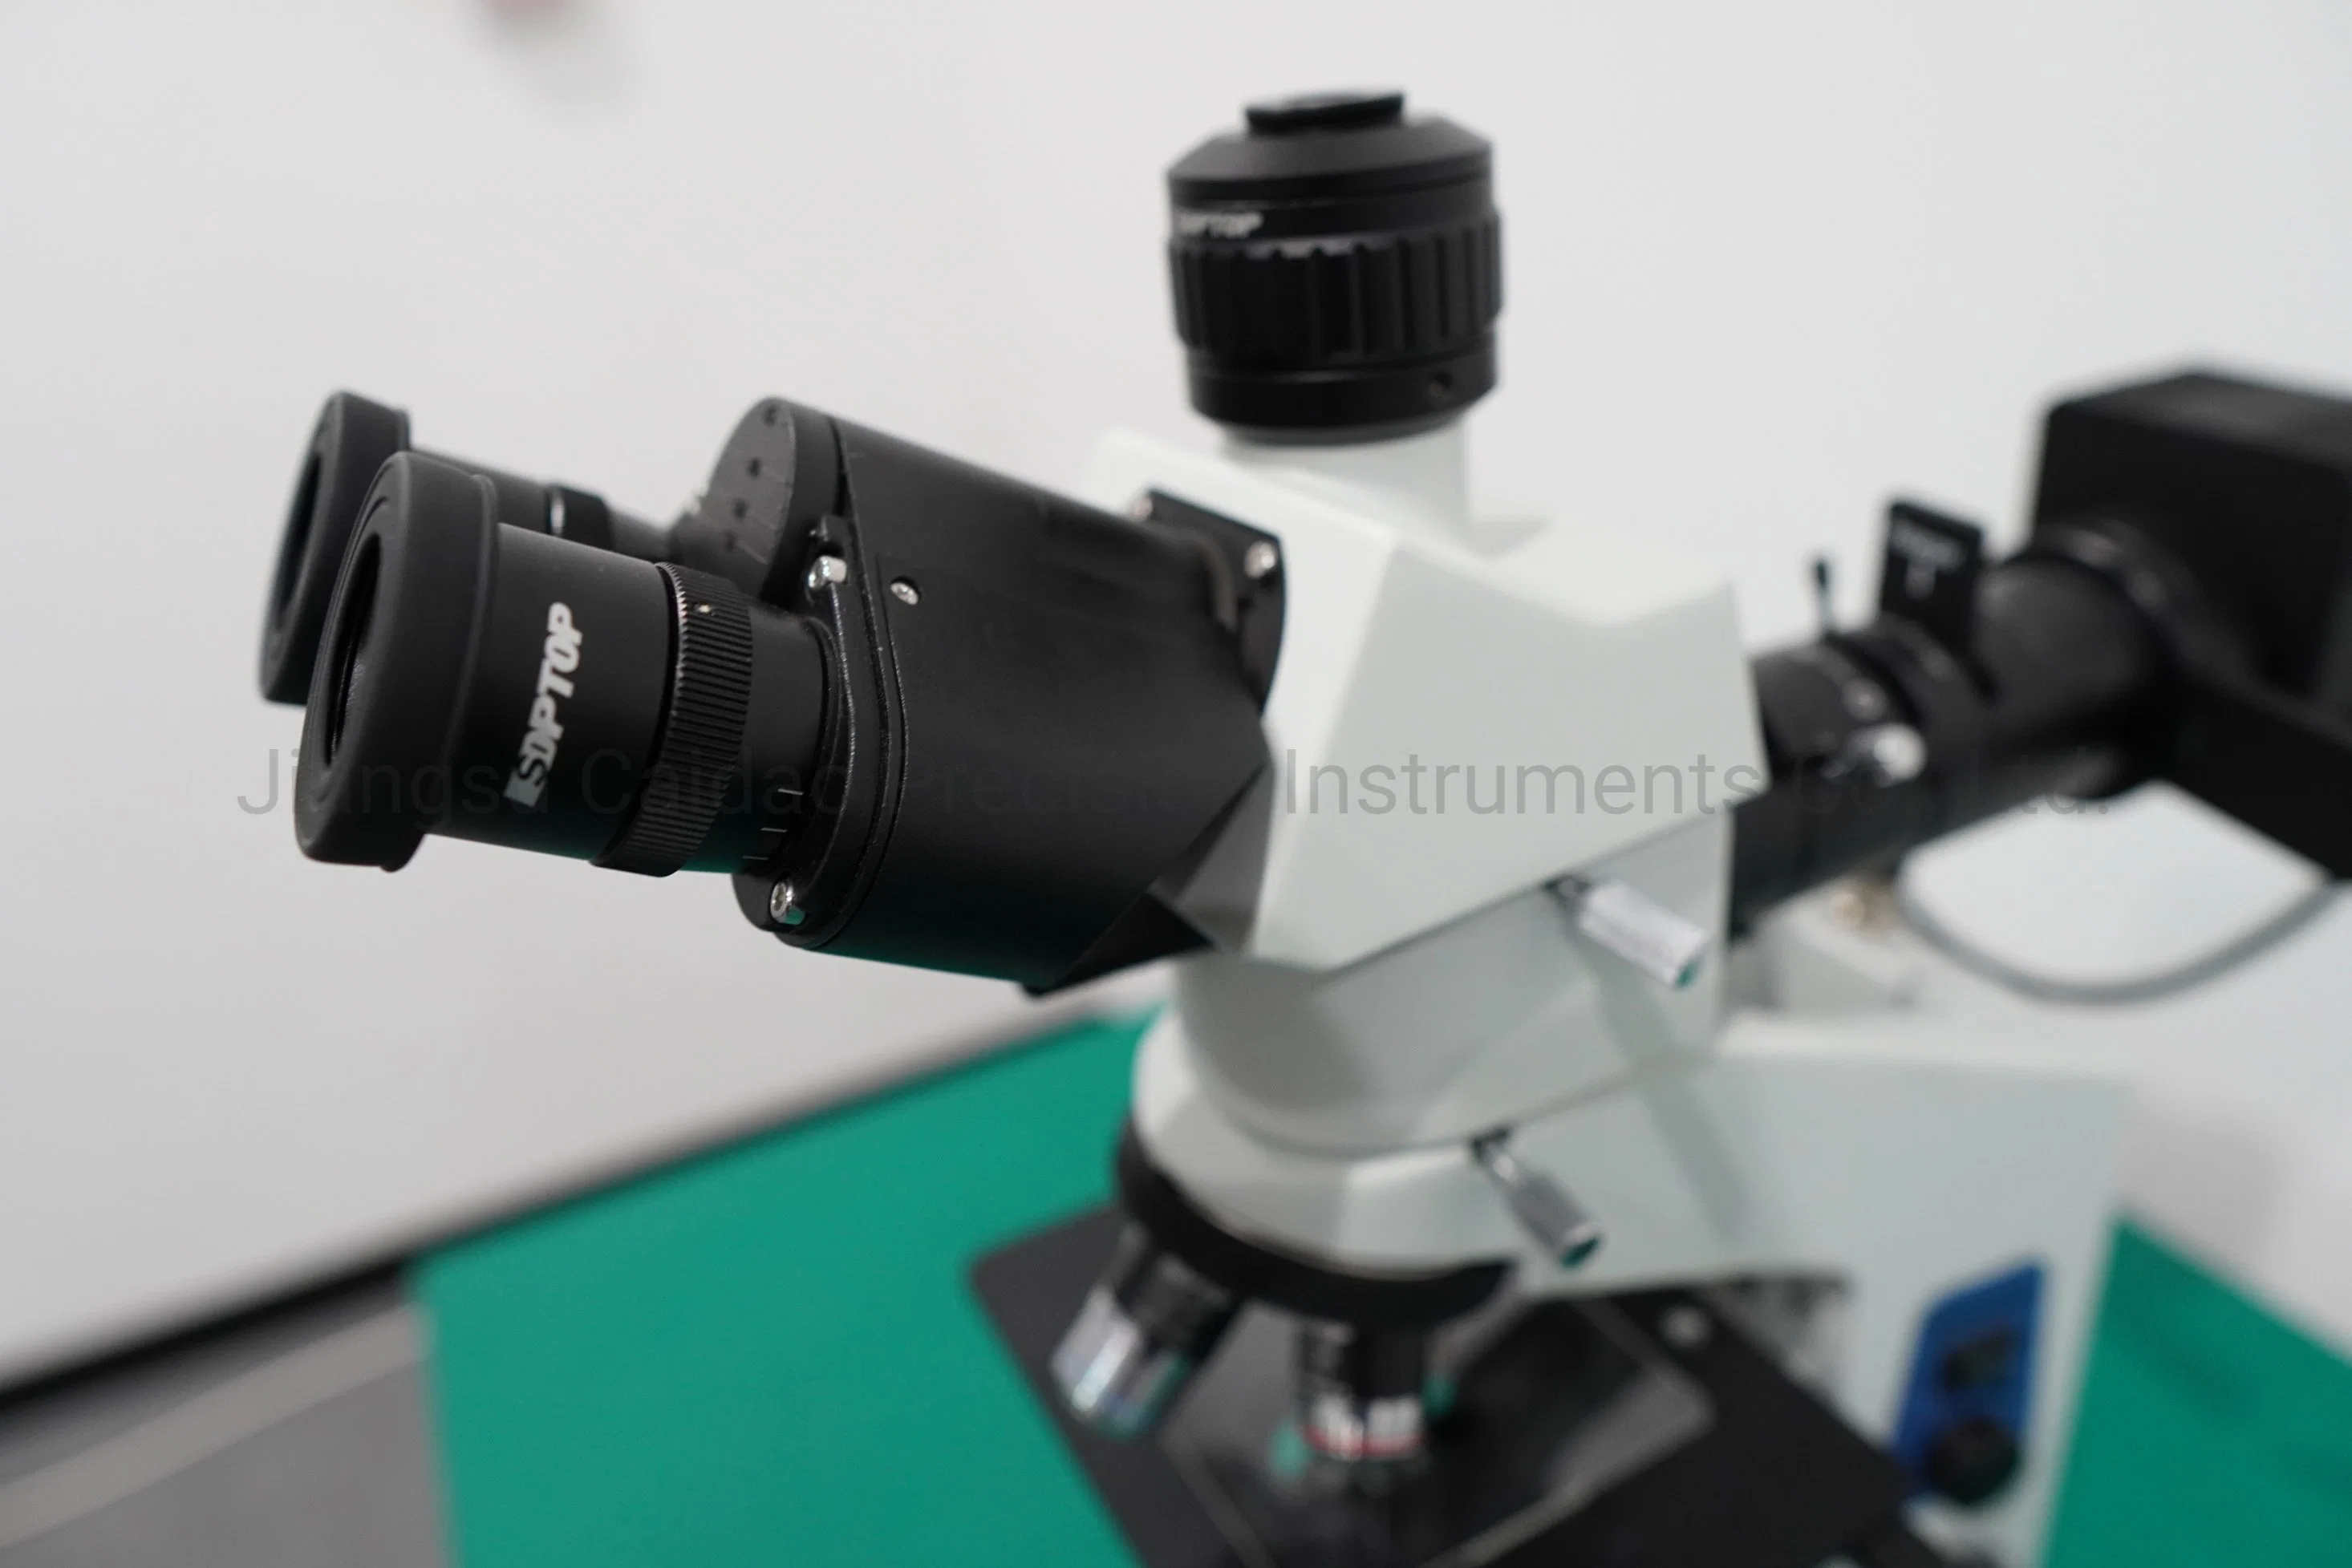 Laboratorio Profesional Microscopio de fluorescencia con la cámara biológica Intc-LV11